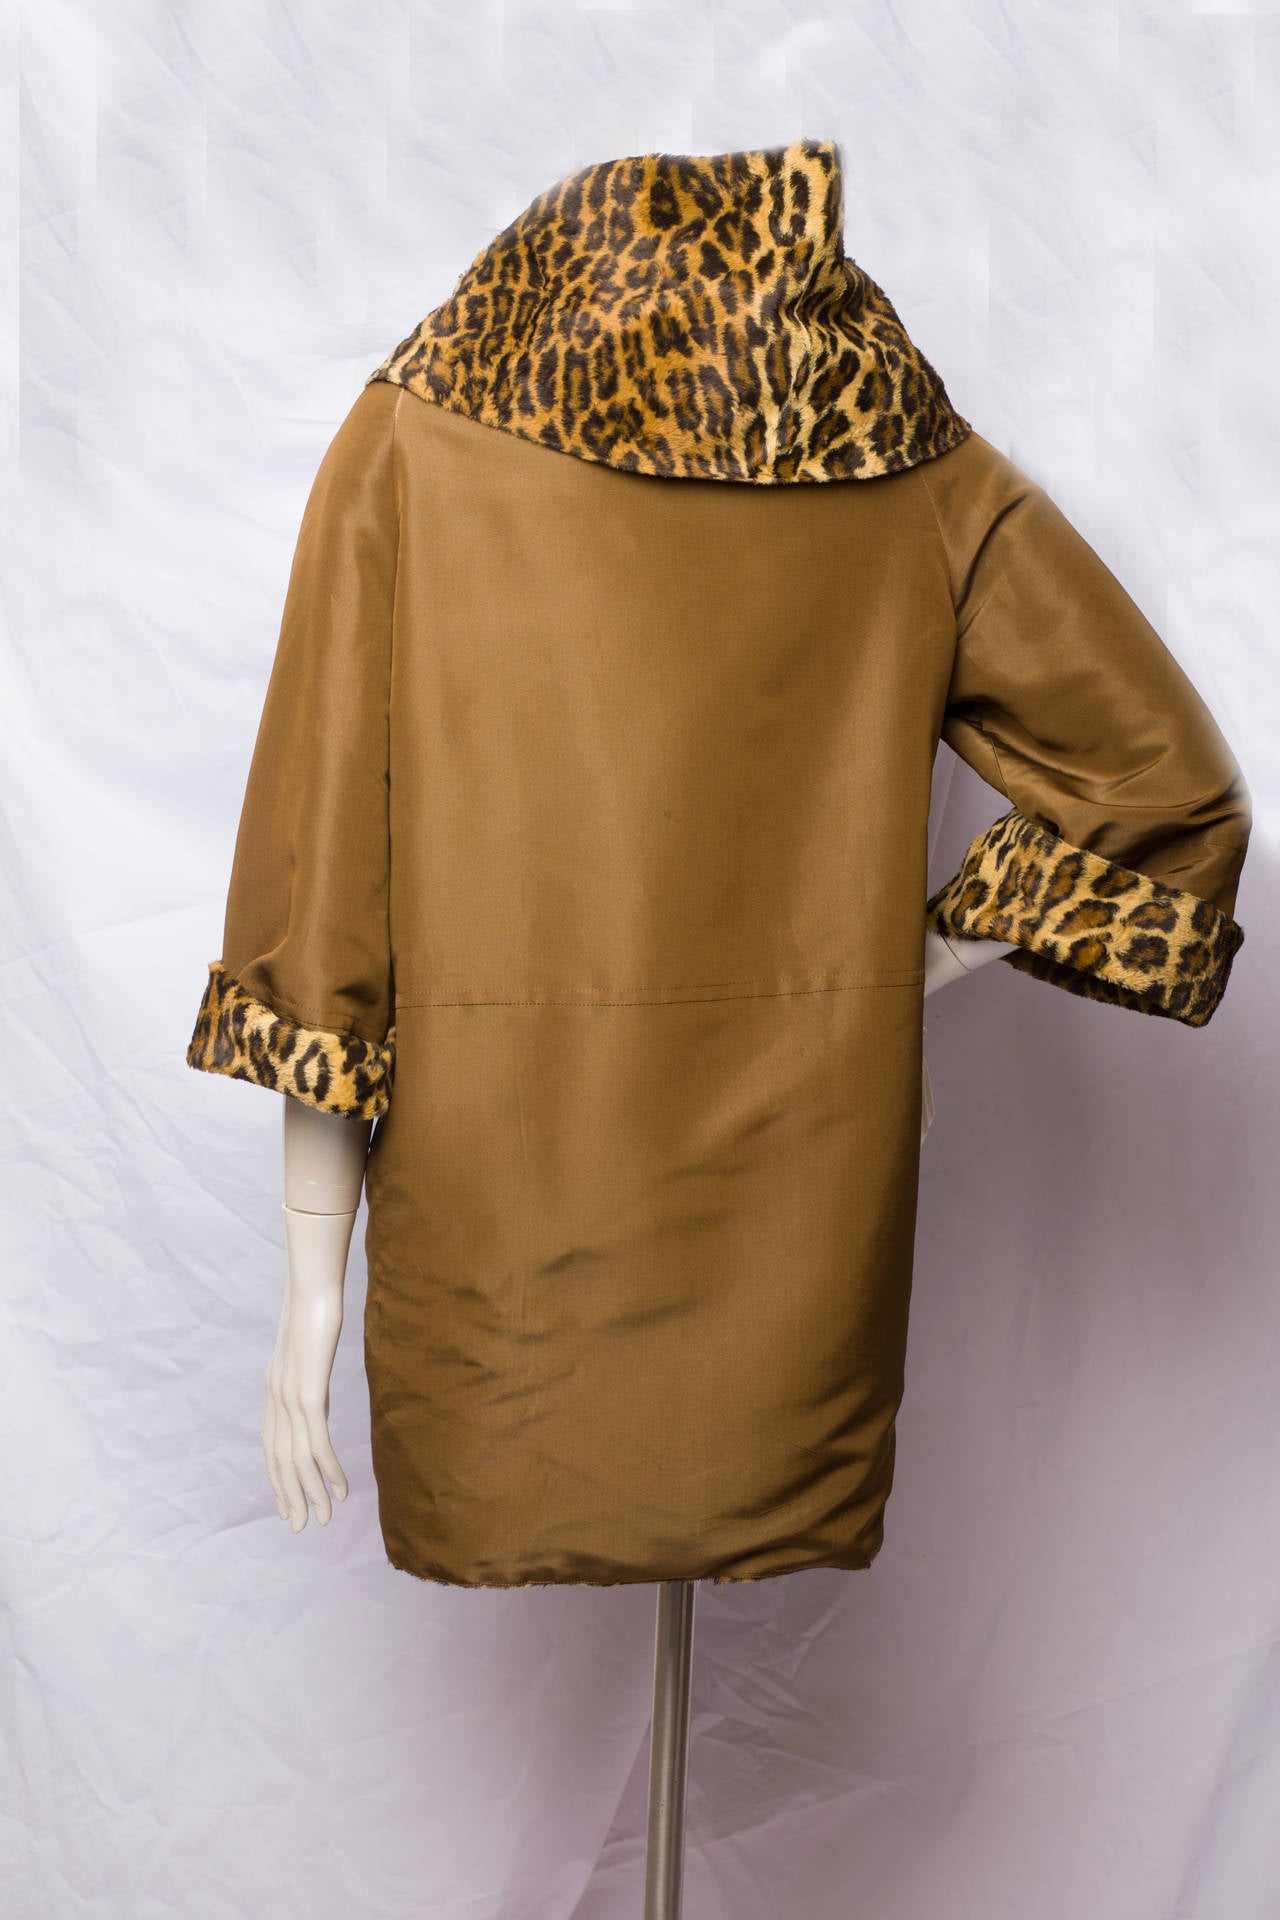 1980s Christian Lacroix Awesome Jacket.
100% silk
leopard print' cotton lining 
italian 40 size range